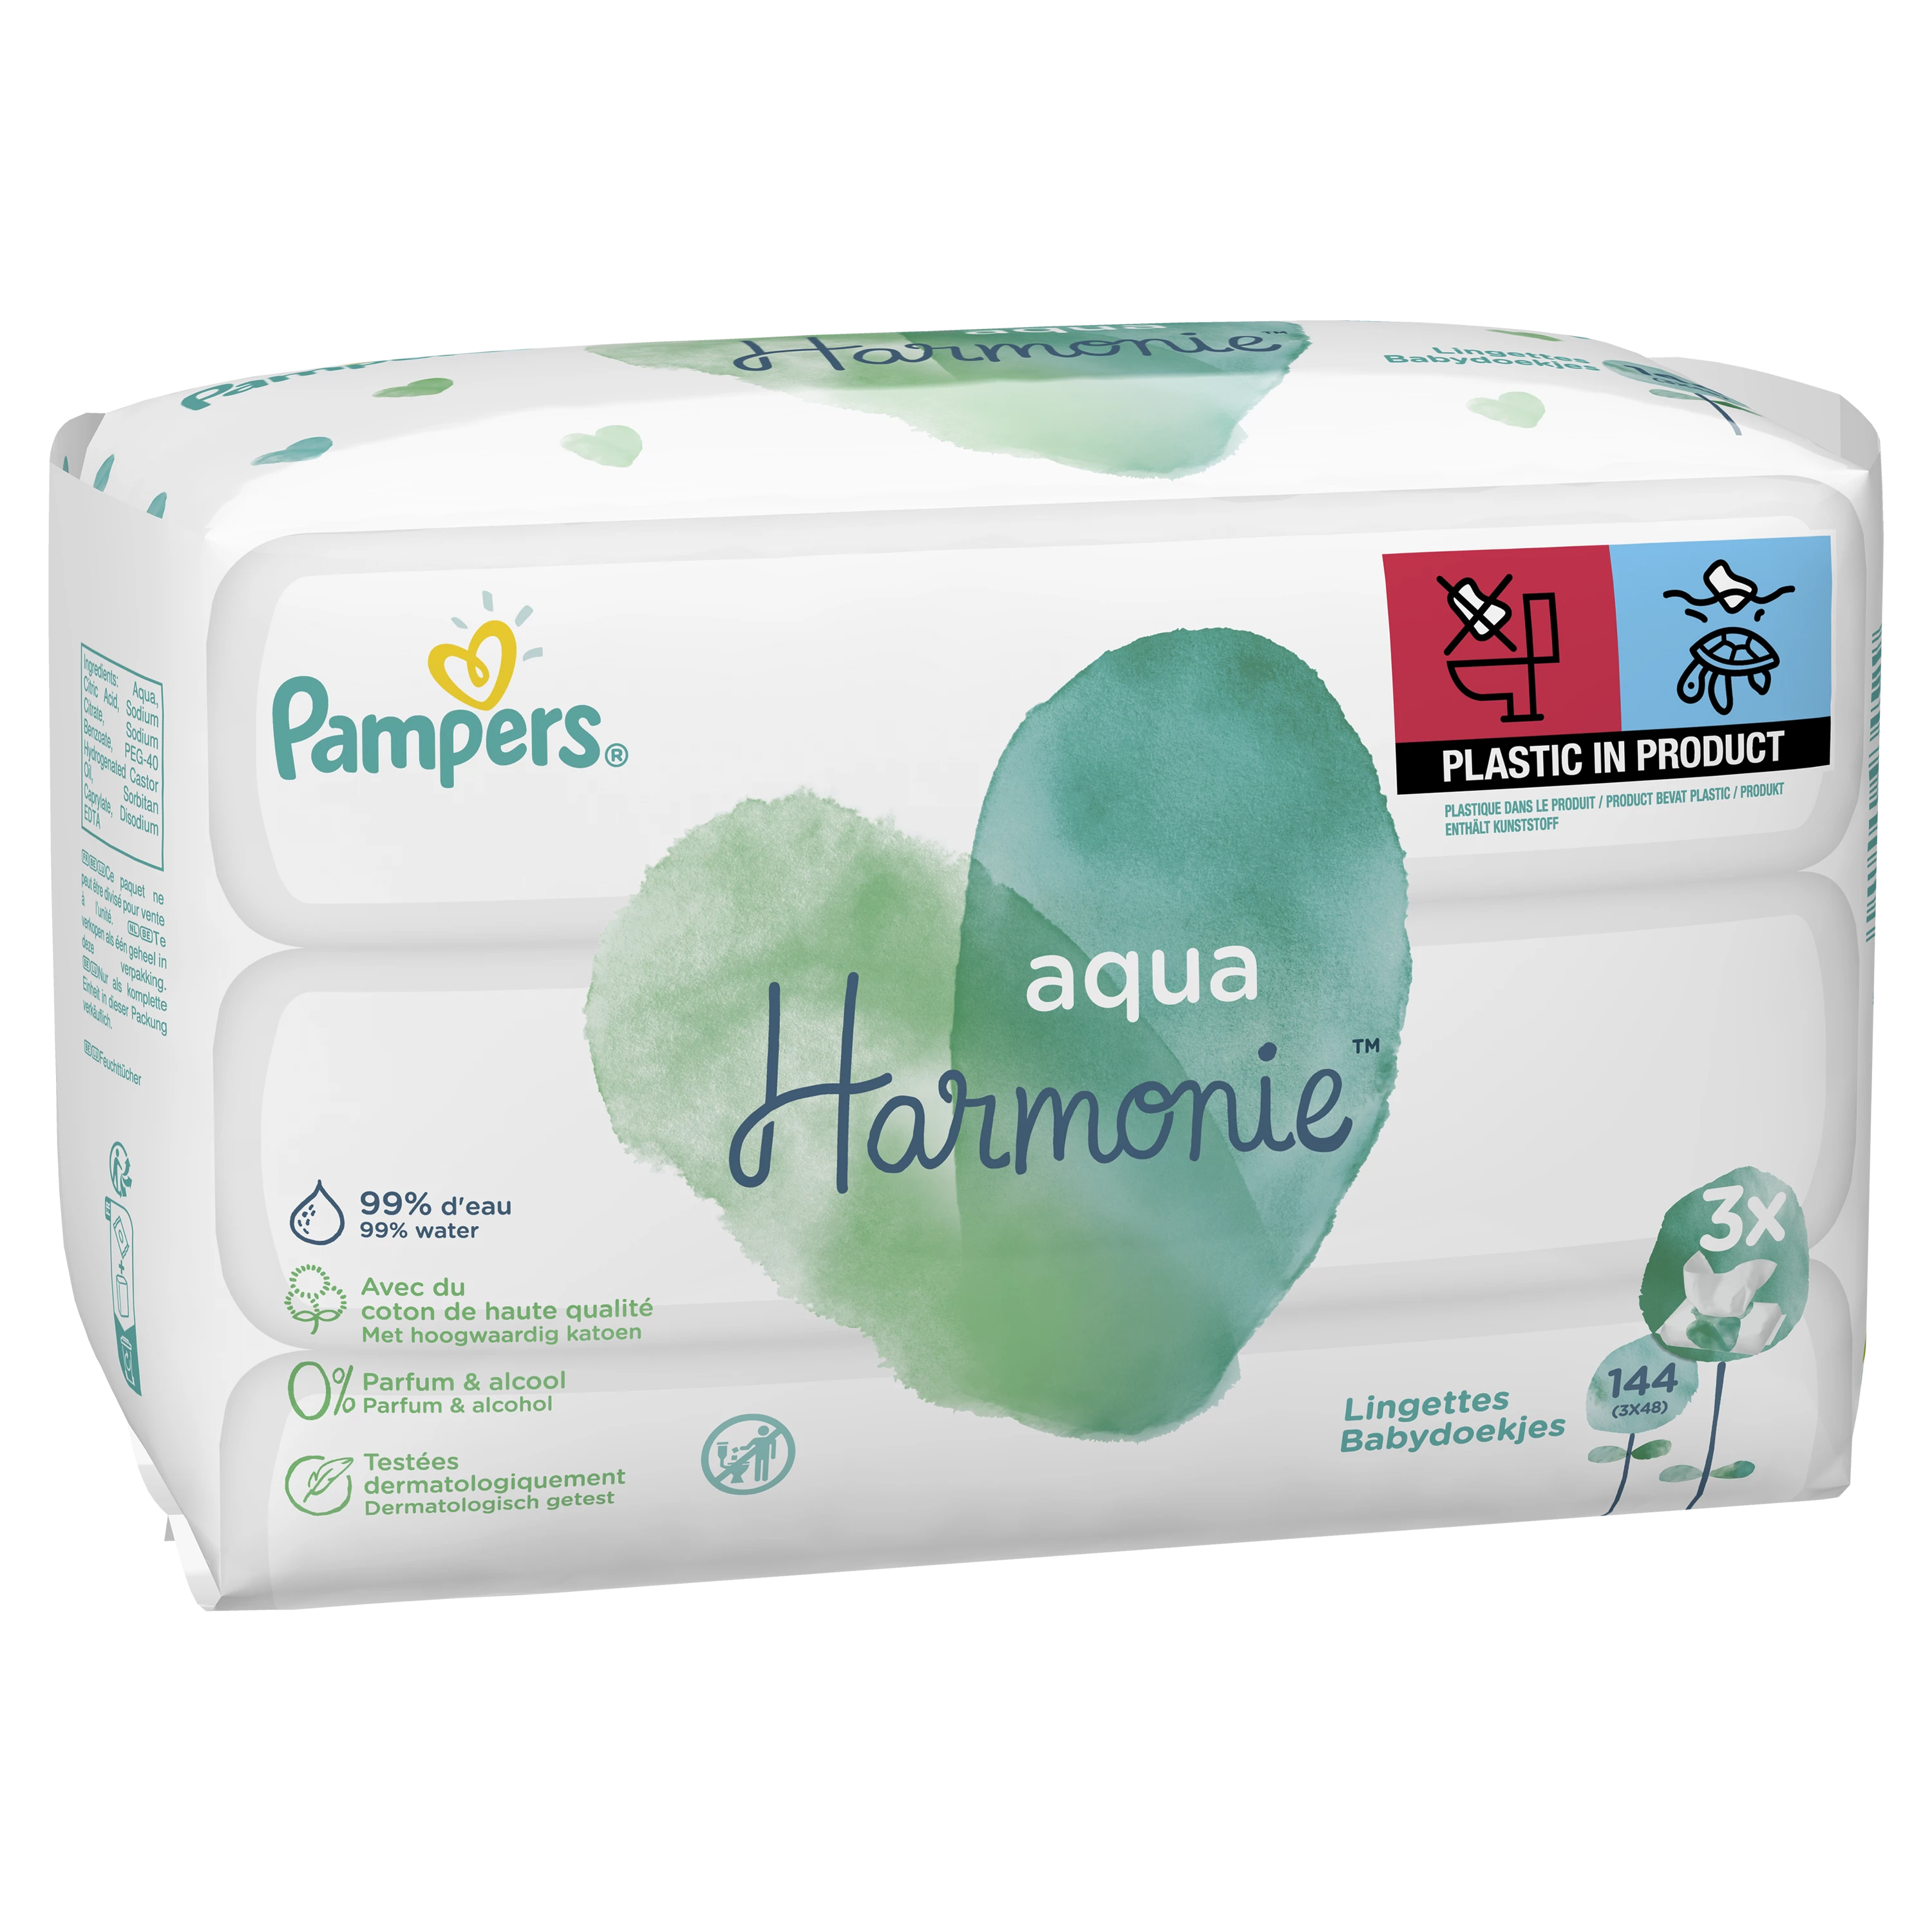 Aqua harmony wipes 3x48 - PAMPERS